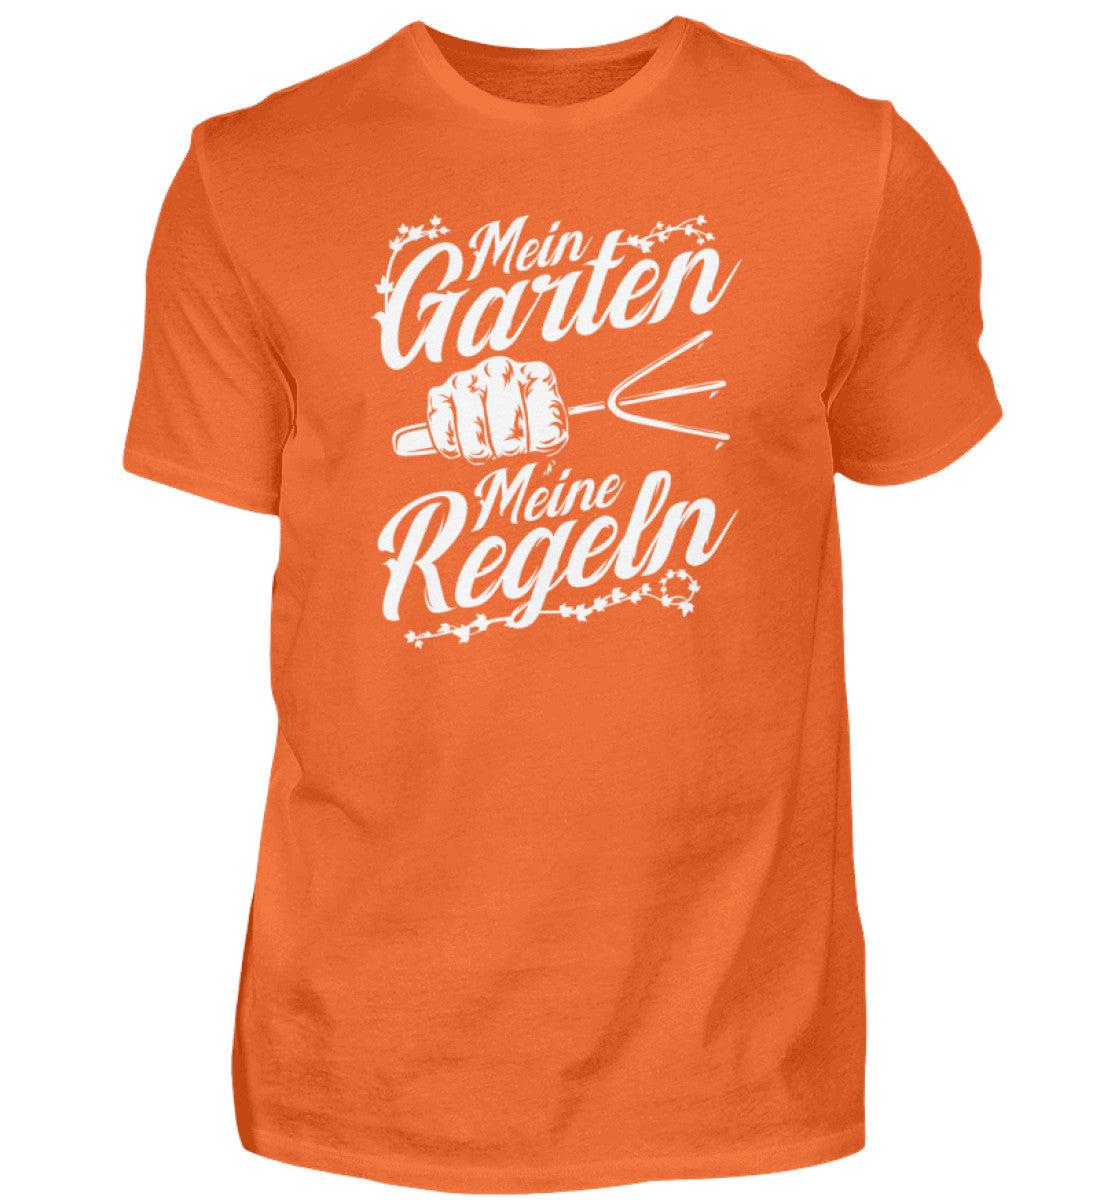 Mein Garten meine Regeln · Herren T-Shirt-Herren Basic T-Shirt-Orange Crush-S-Agrarstarz